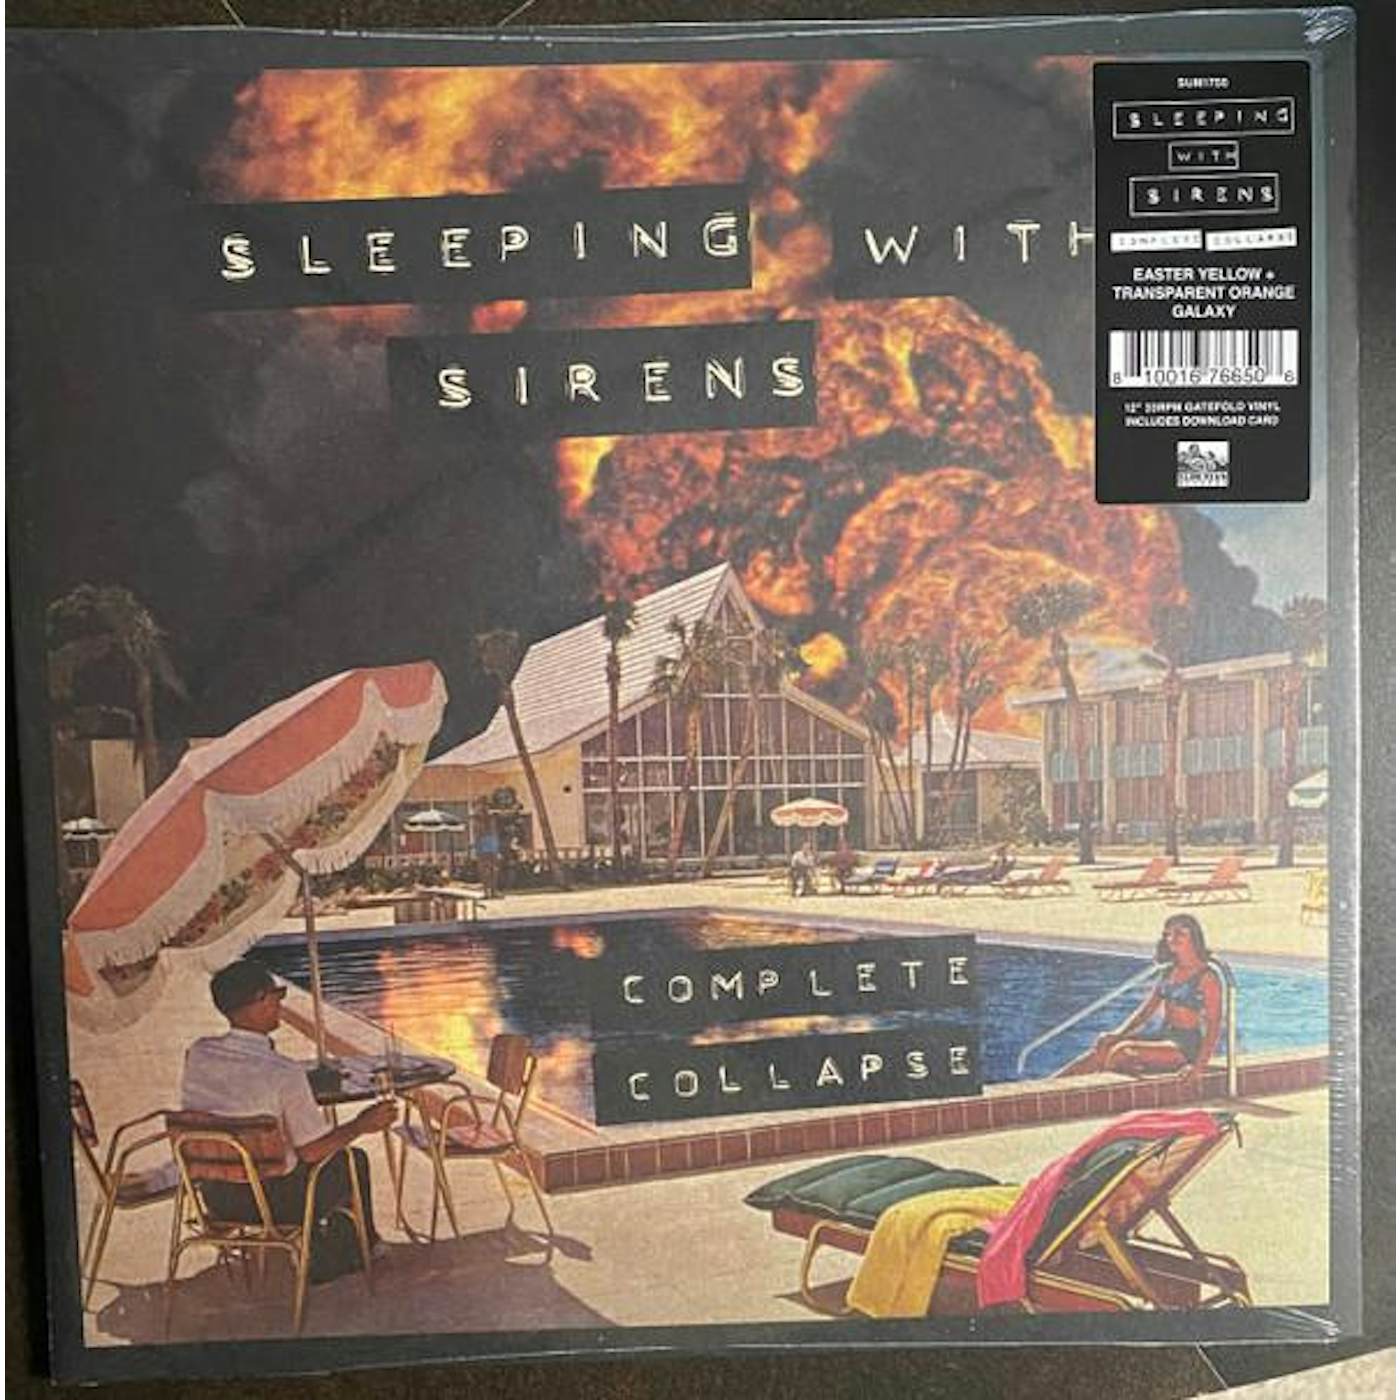 Sleeping With Sirens COMPLETE COLLAPSE (EASTER YELLOW/TRANSLUCENT ORANGE VINYL) Vinyl Record